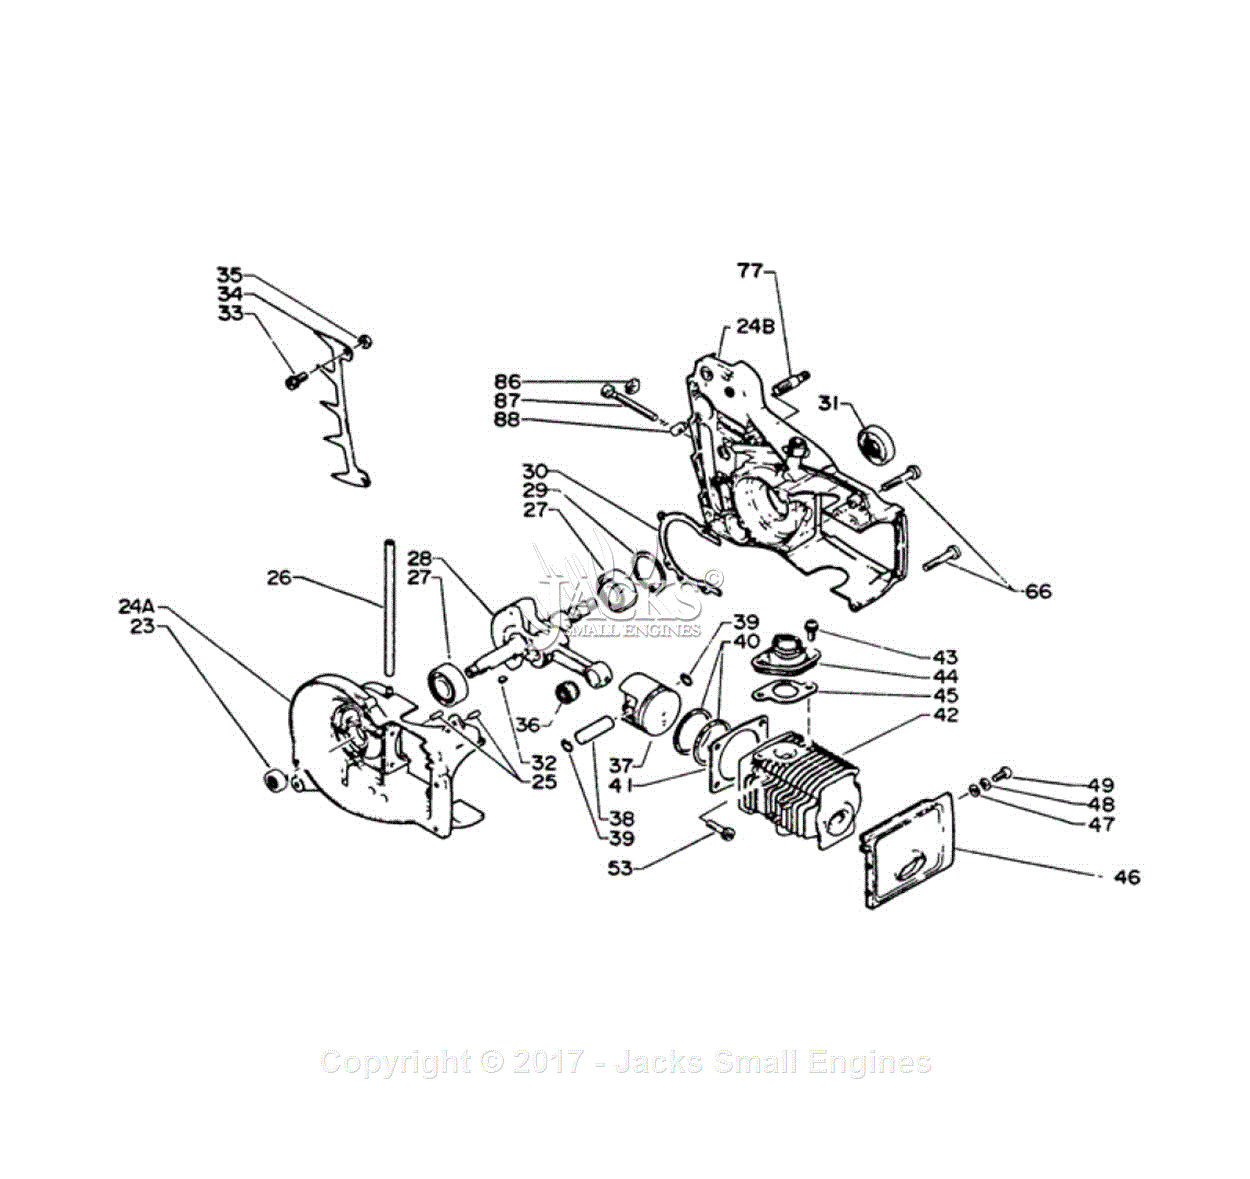 [DIAGRAM] Craftsman Chainsaw Engine Diagram FULL Version HD Quality